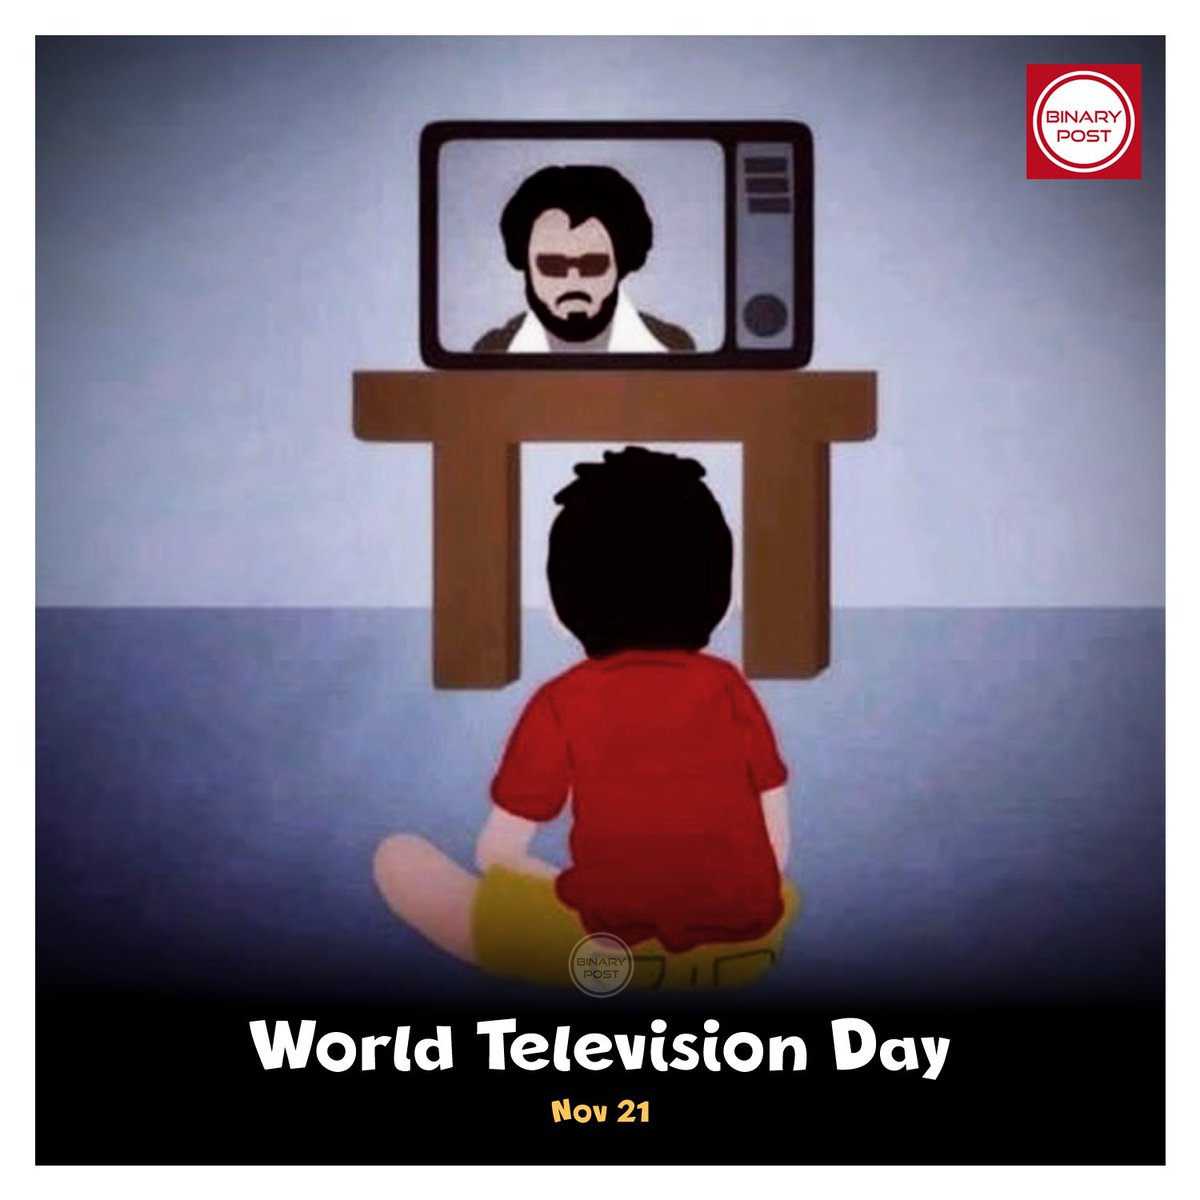 Nov 21, உலக தொலைக்காட்சி தினம்...

#WorldTelevisionDay

#Thalaivar 🤘 #Superstar #Rajinikanth #TelevisionDay @rajinikanth #BinaryPost